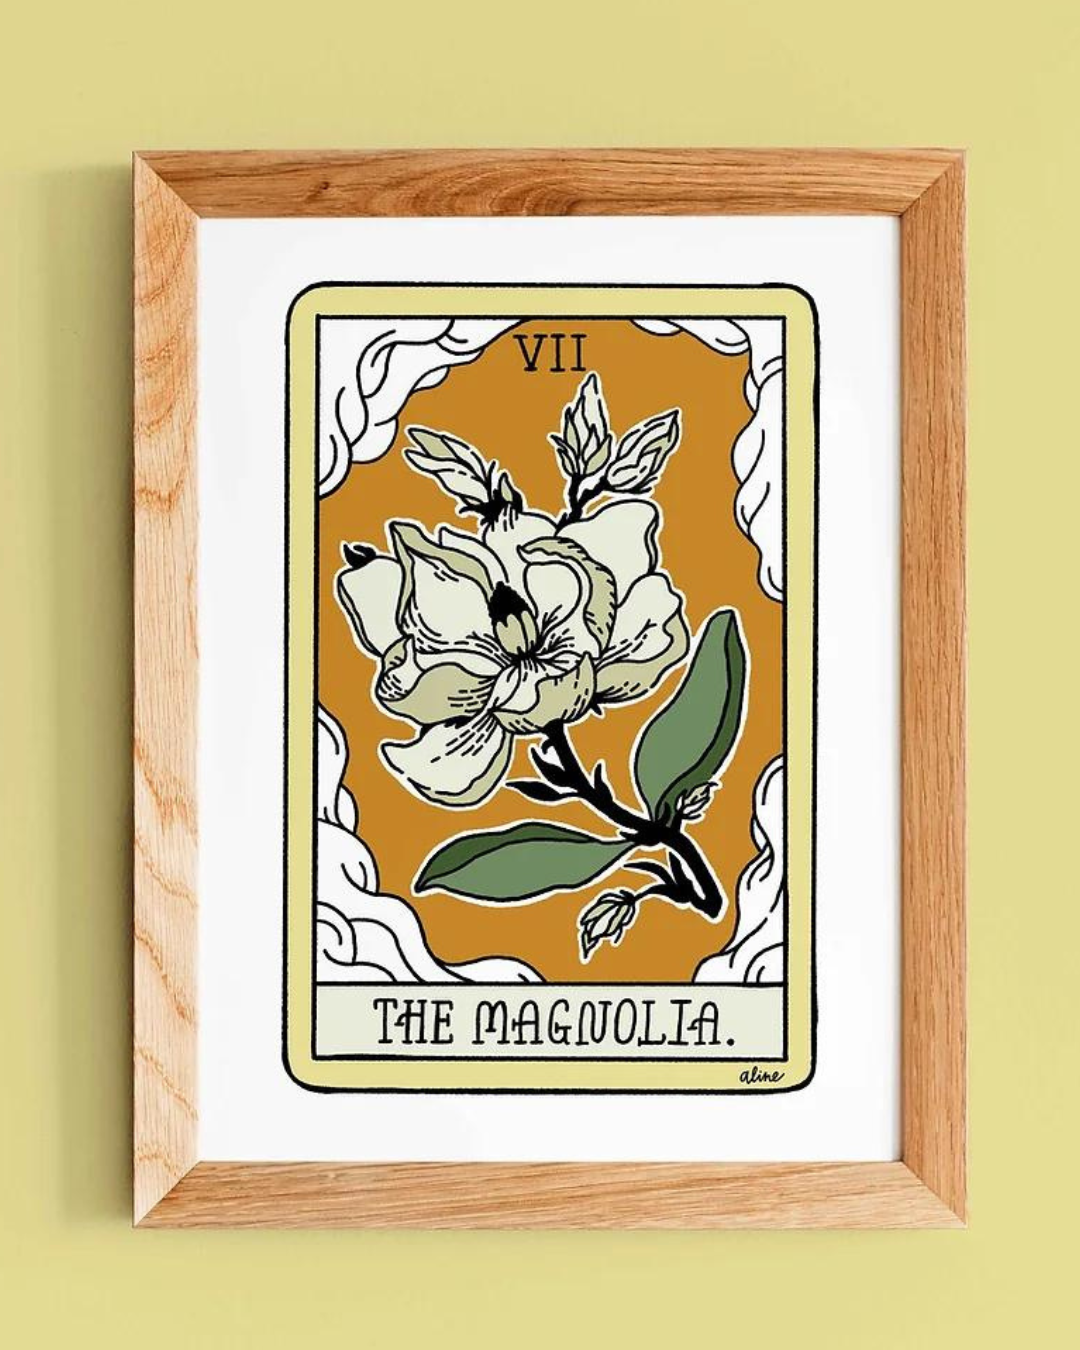 The Magnolia: Tarot Print